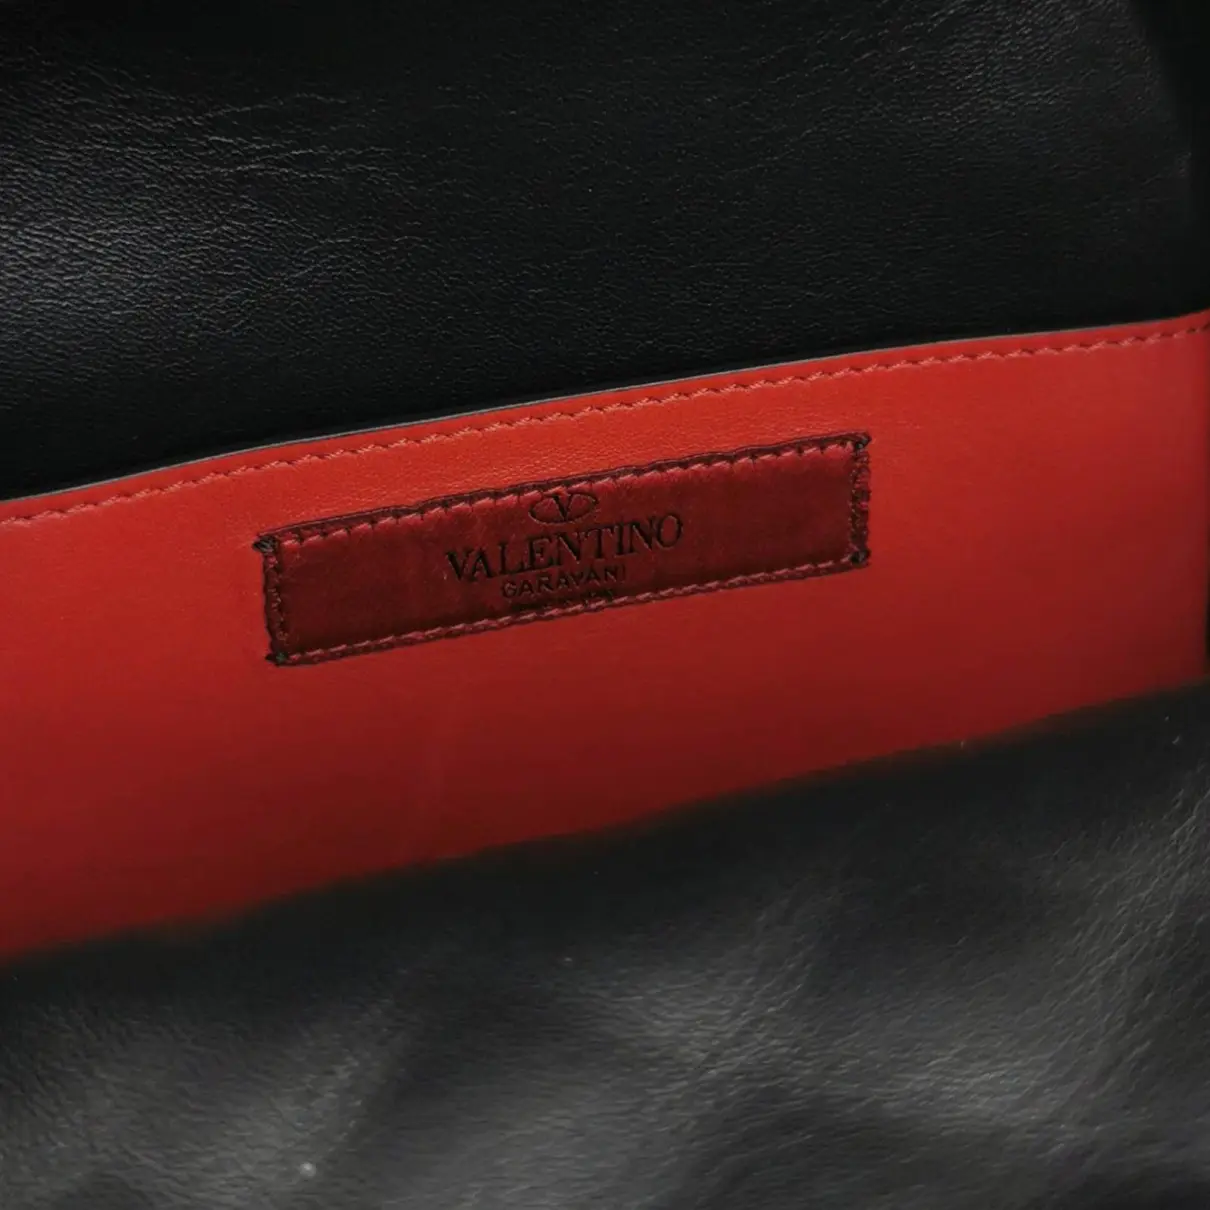 Buy Valentino Garavani Rockstud spike leather backpack online